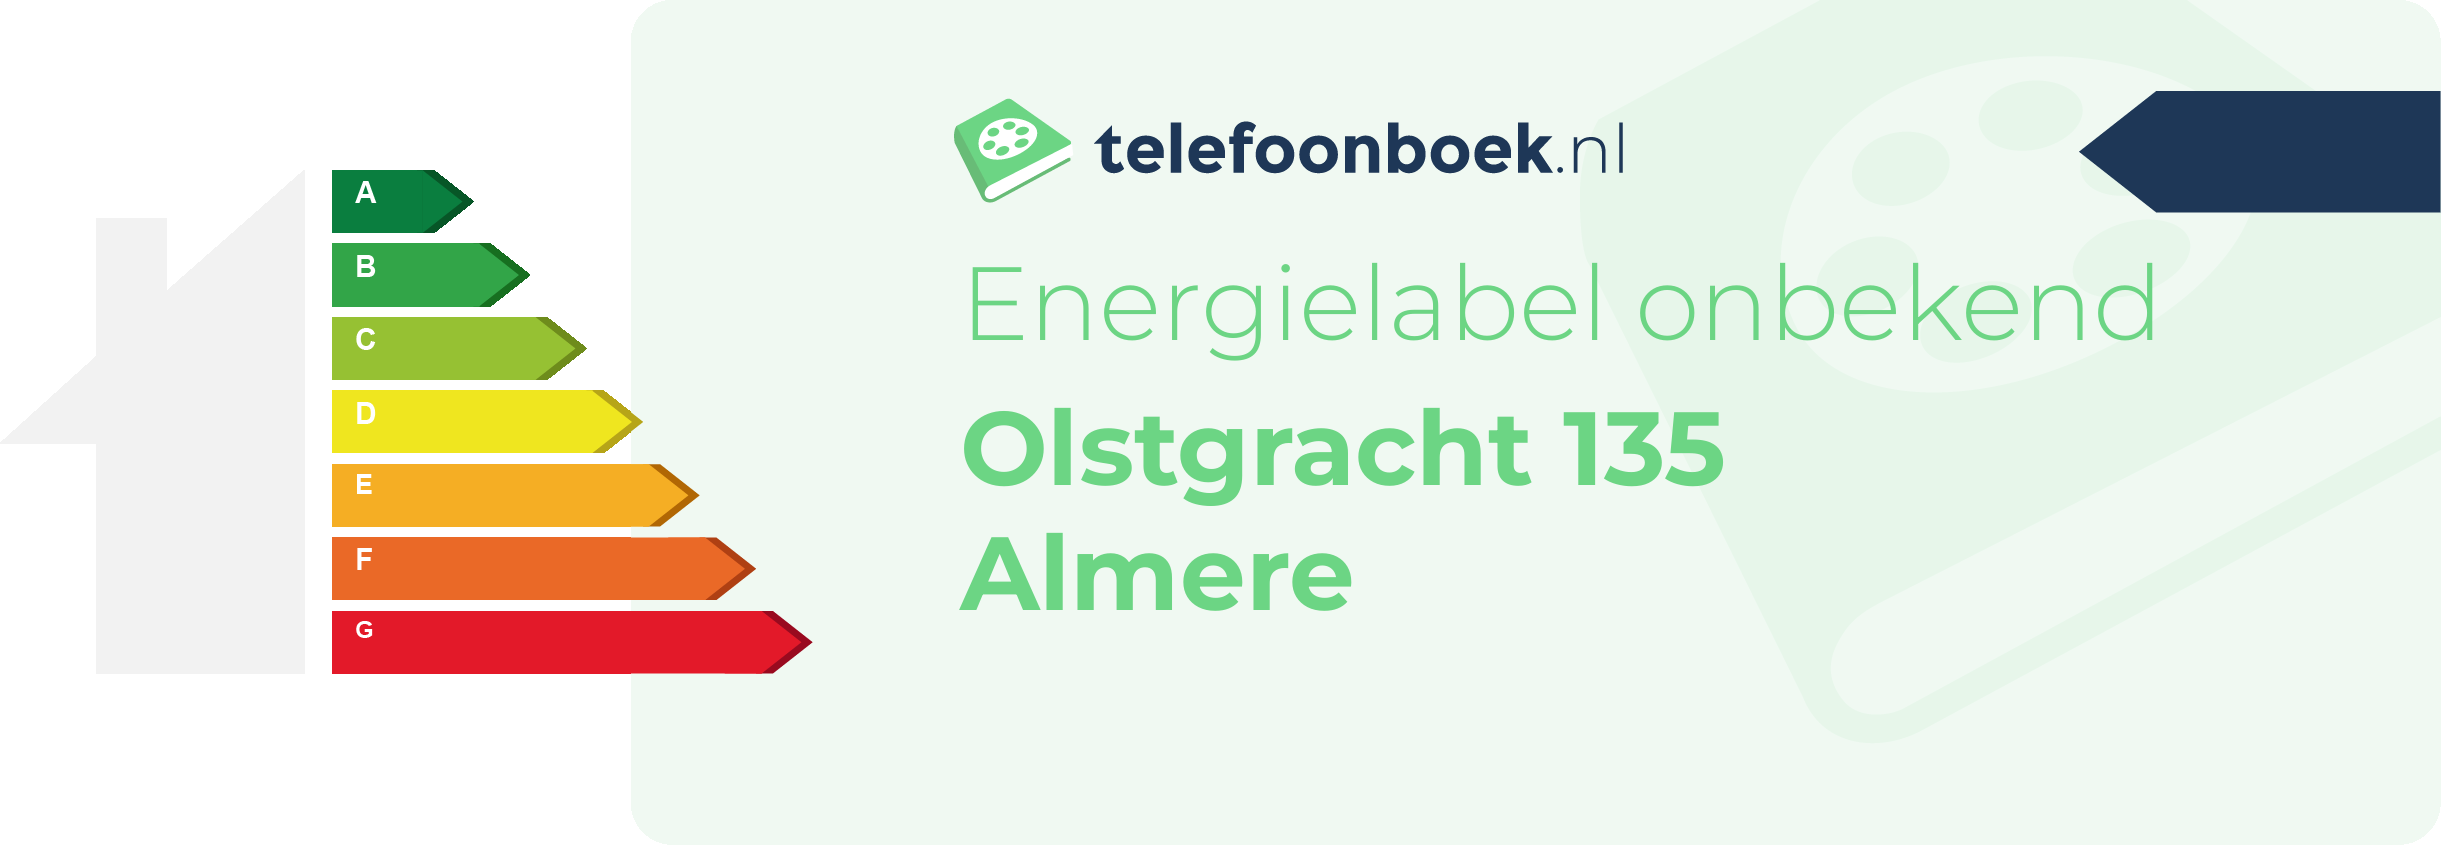 Energielabel Olstgracht 135 Almere